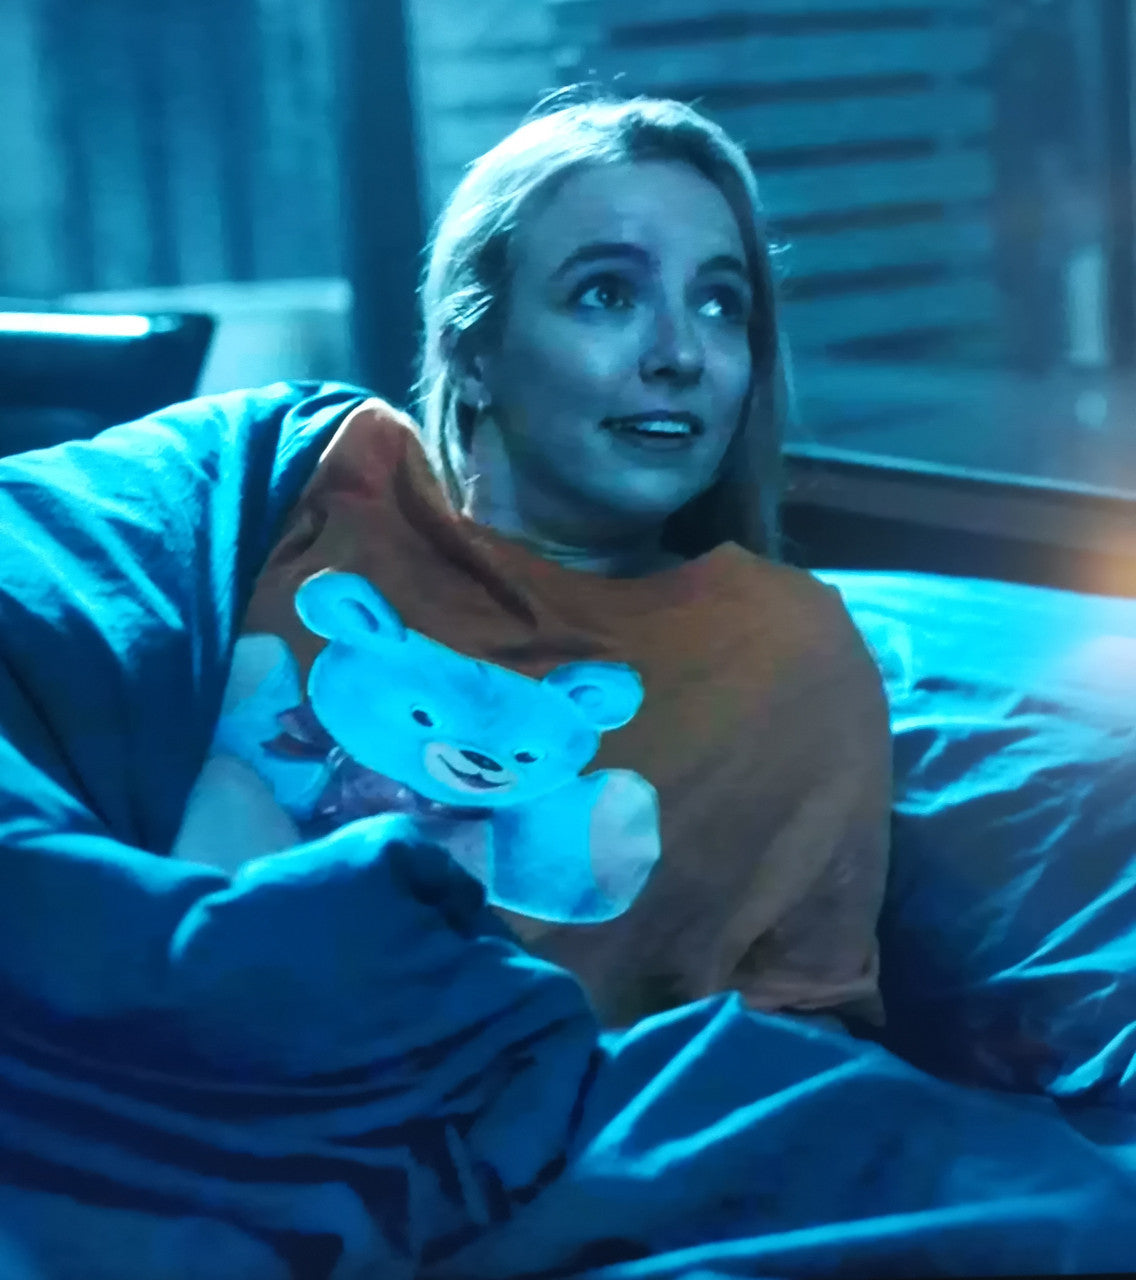 Villanelle Orange Teddy Bear KiSS T-Shirt - Killing Eve Inspired - Jodie Comer Pink Tv Show Quote - British Assassin - Dark Timeline - Season 3 Blue bear